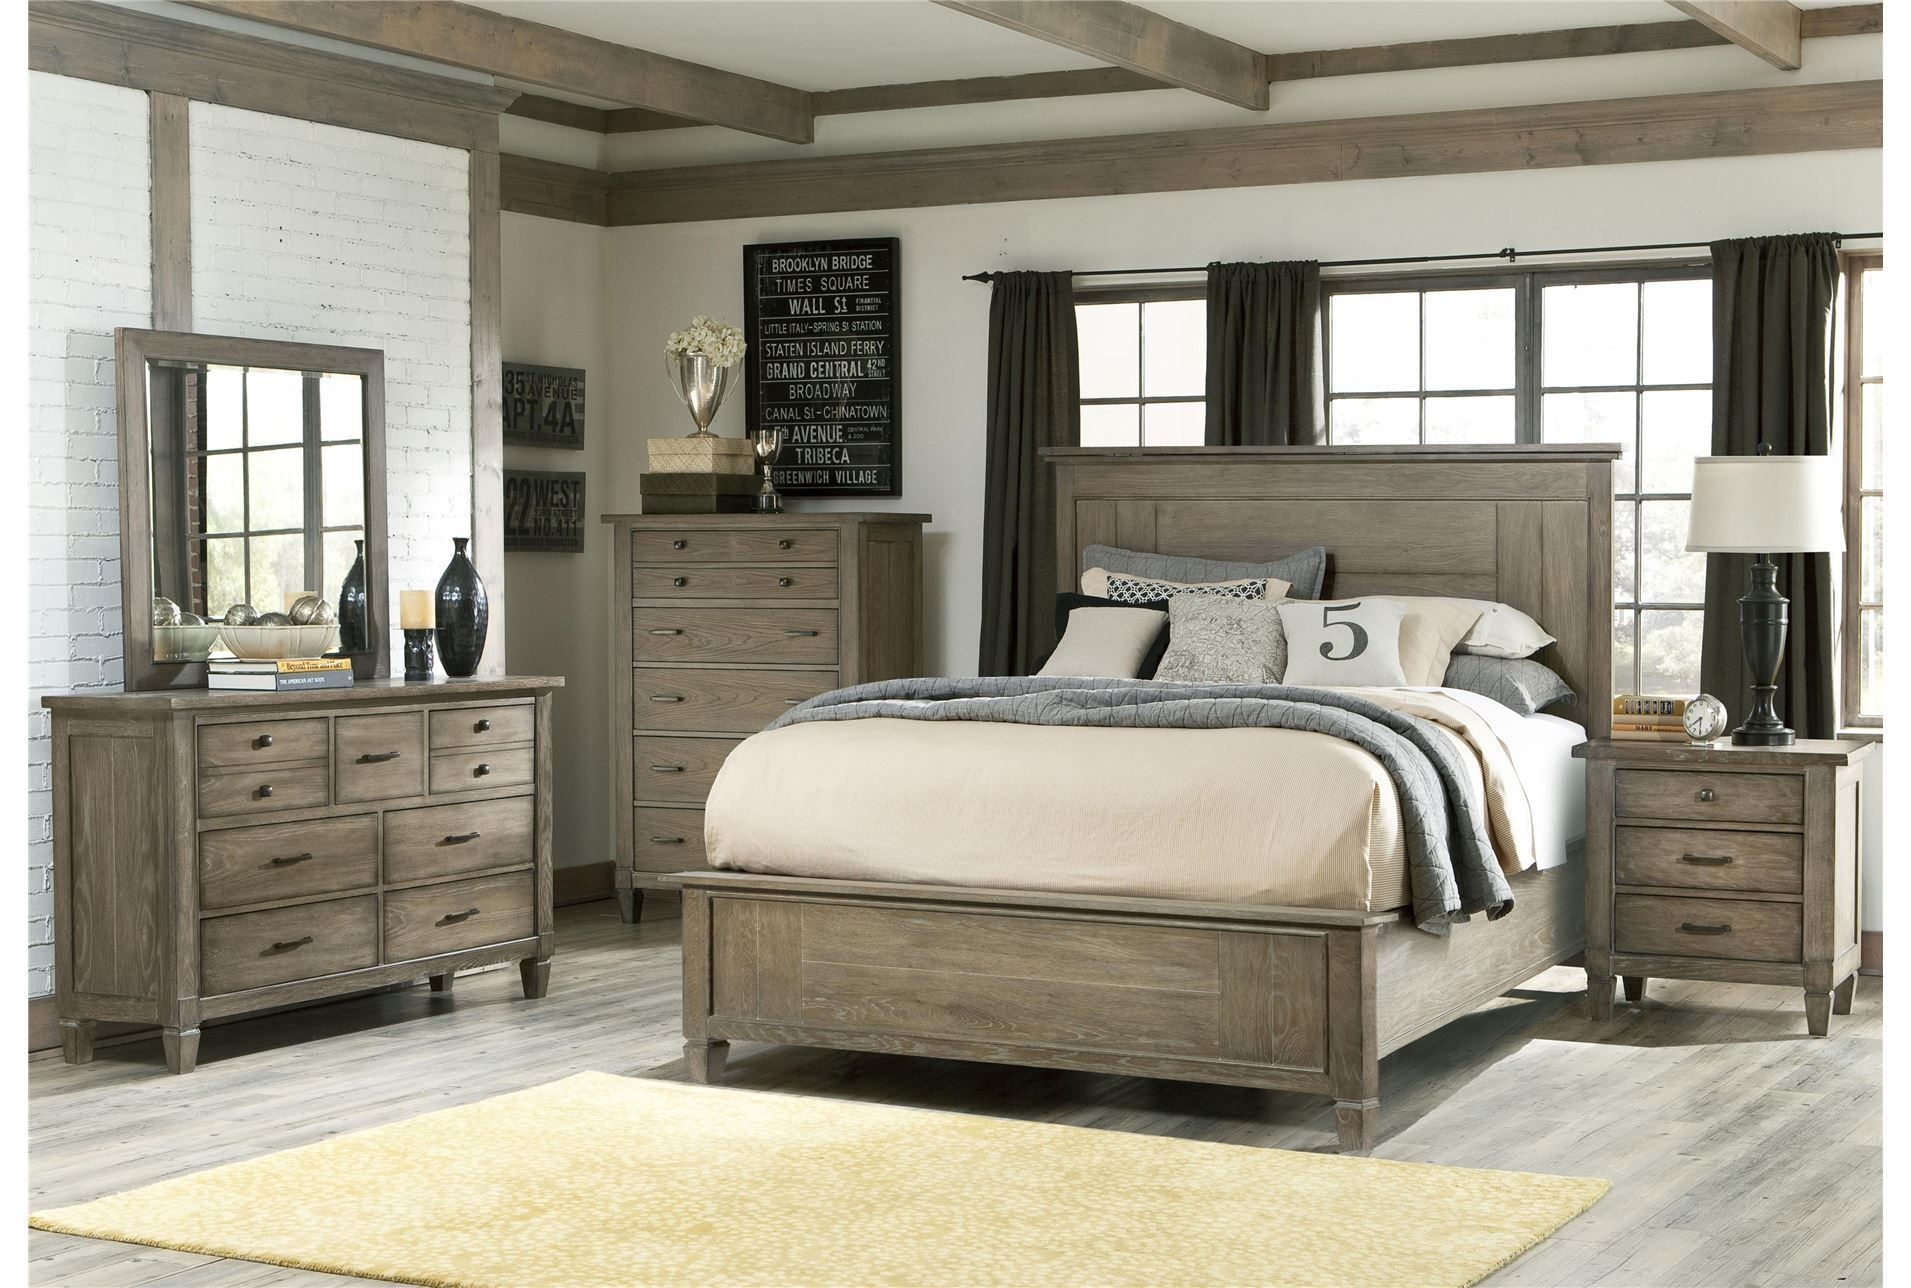 Distressed wood bedroom sets